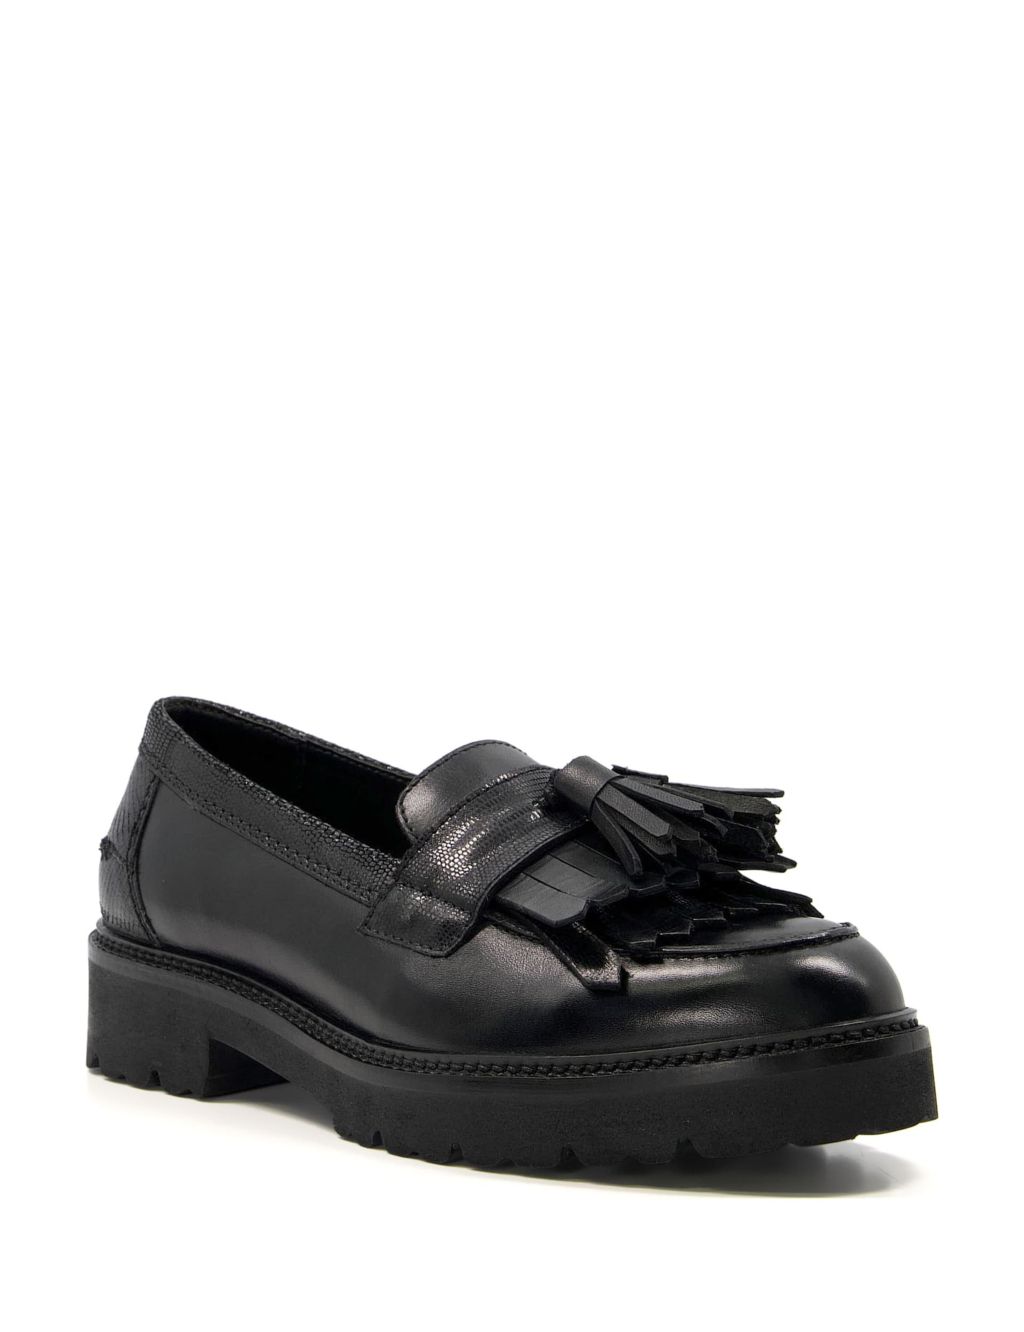 Leather Tassel Flat Loafers image 1